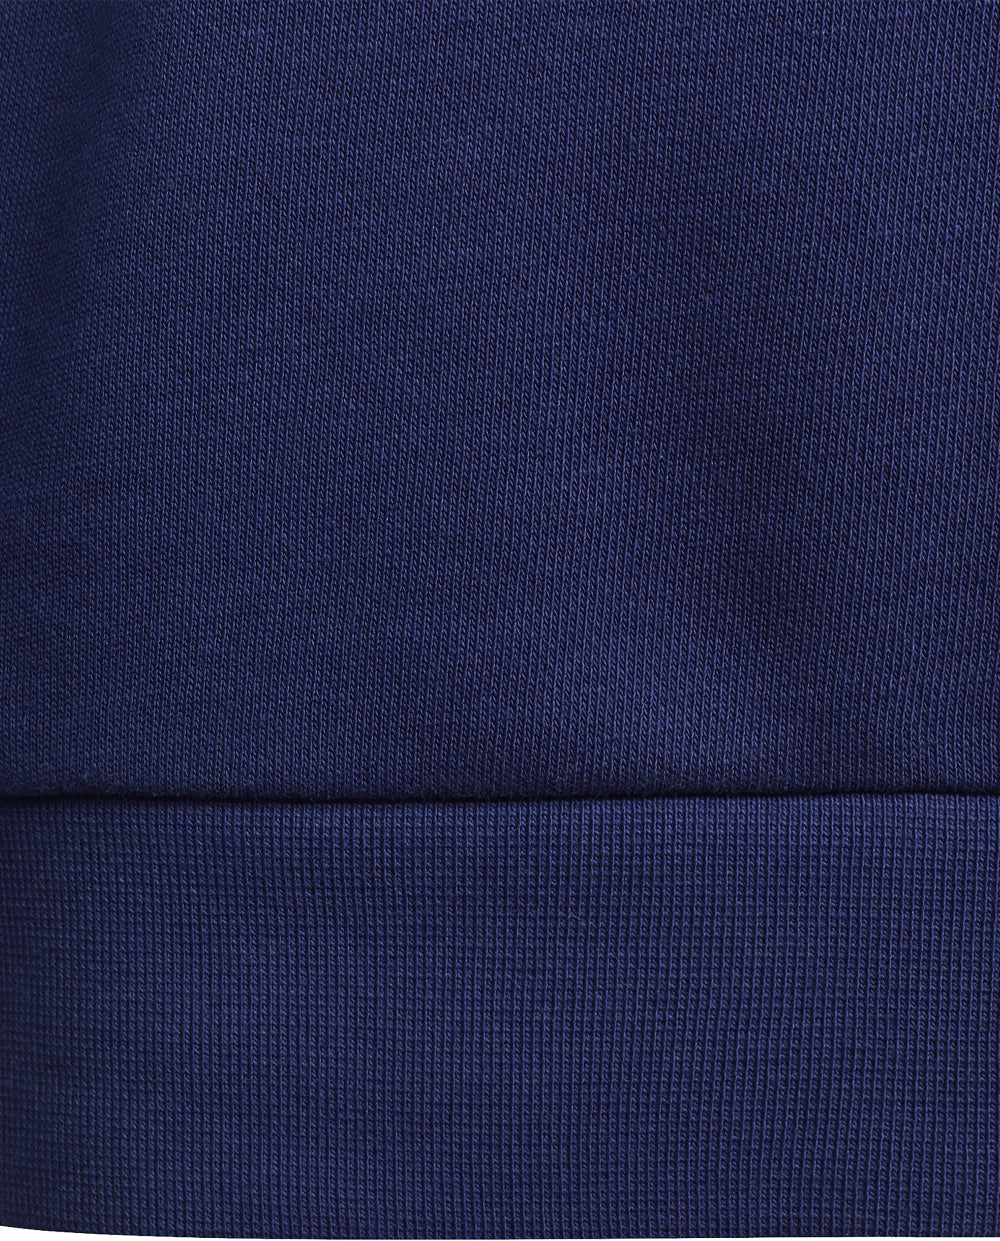 Sweatshirt Adidas Azul Marinho com Branco